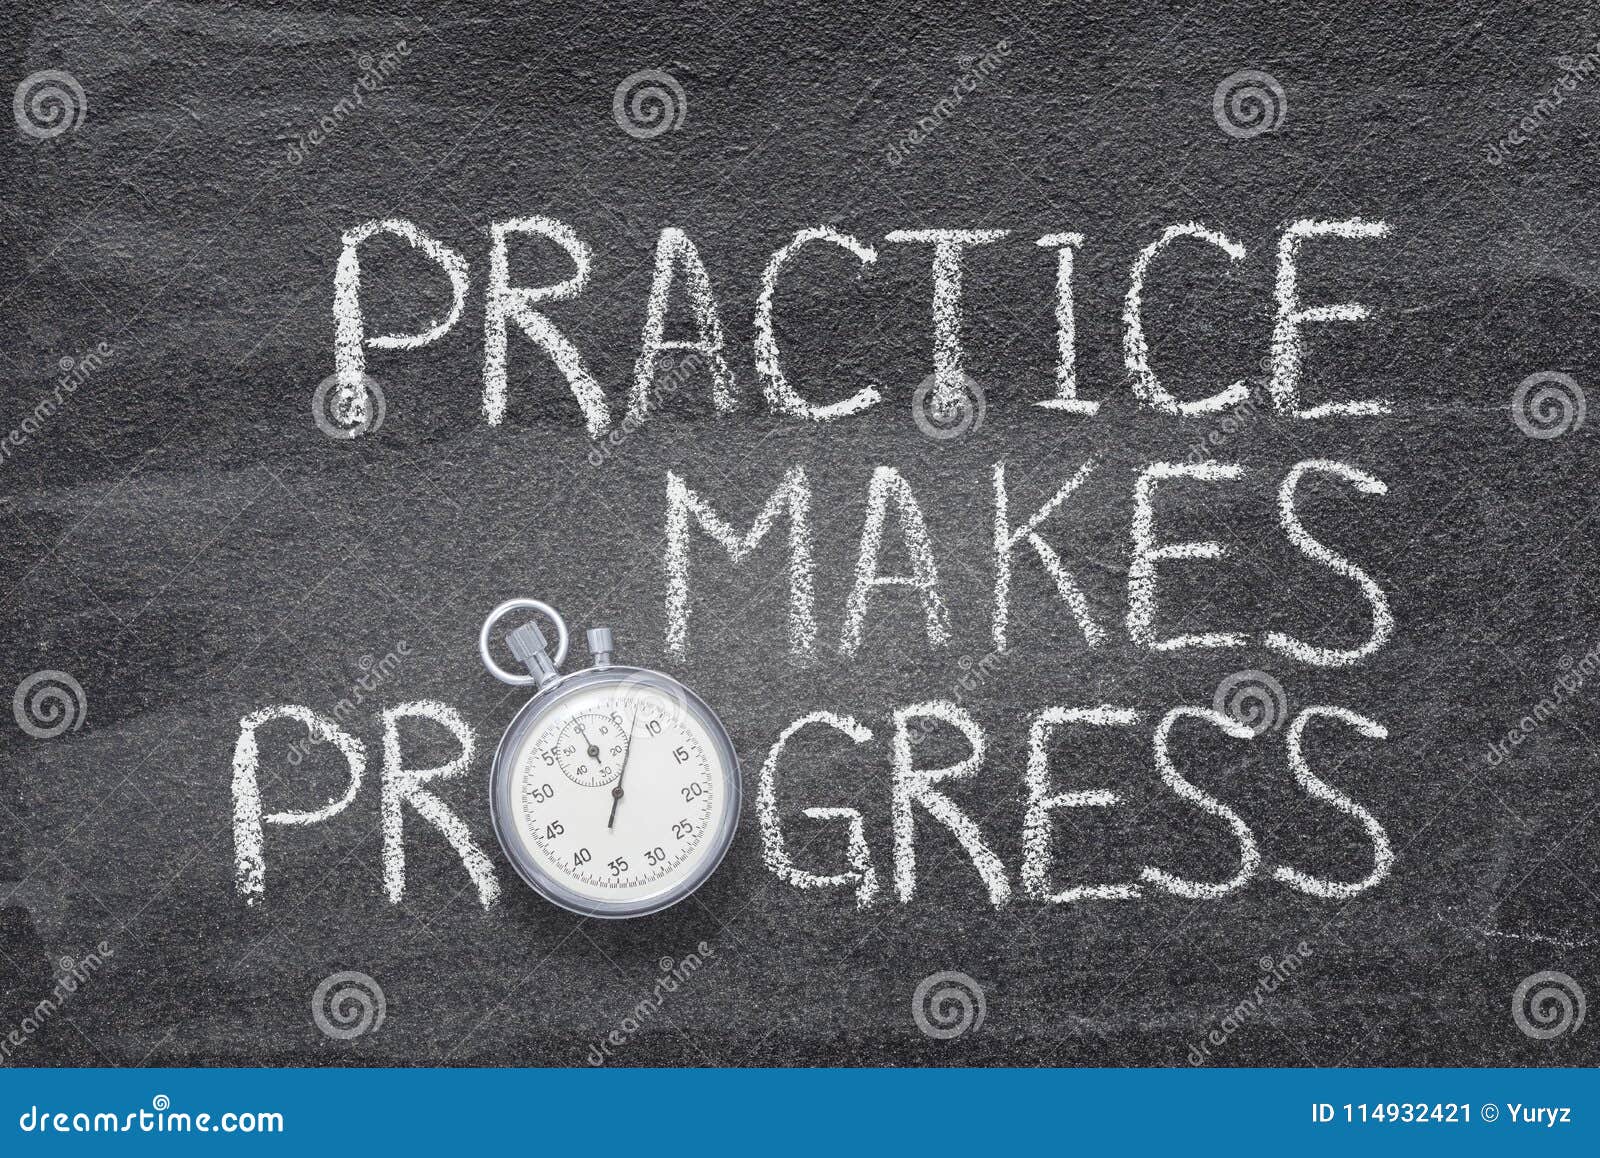 practice makes progress watch